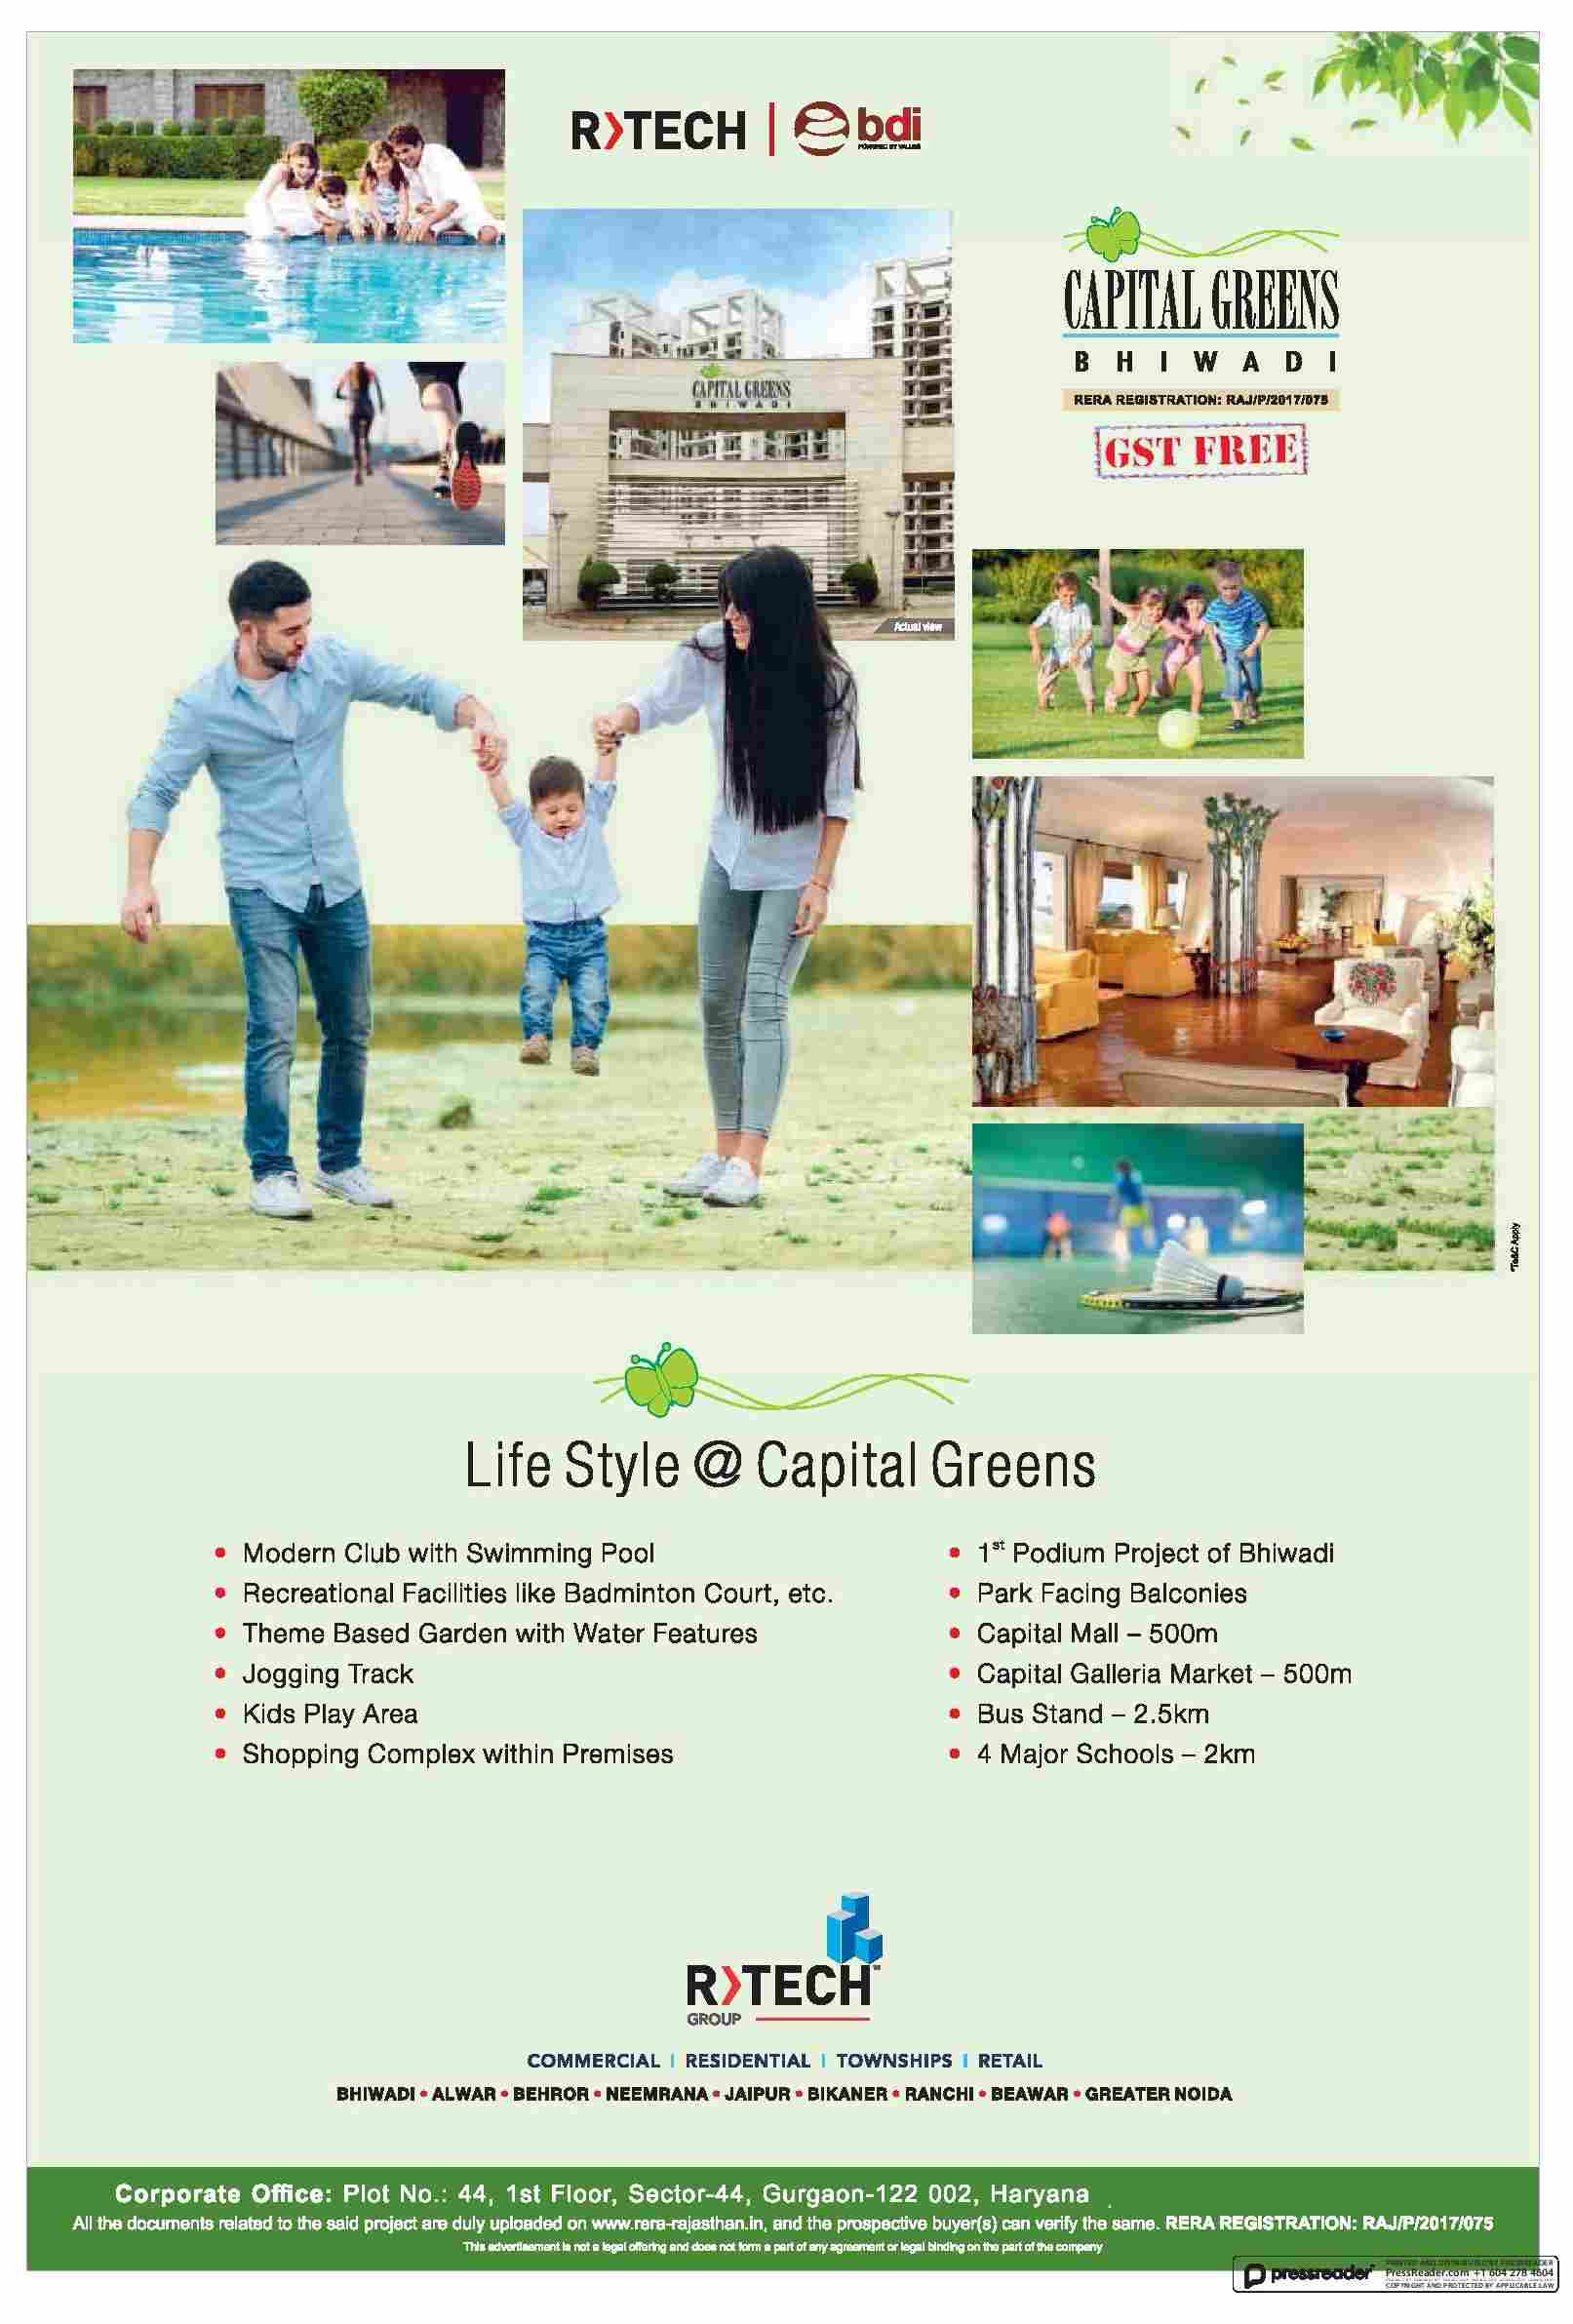 Enjoy the modern lifestyle at R Tech Capital Greens Bhiwadi